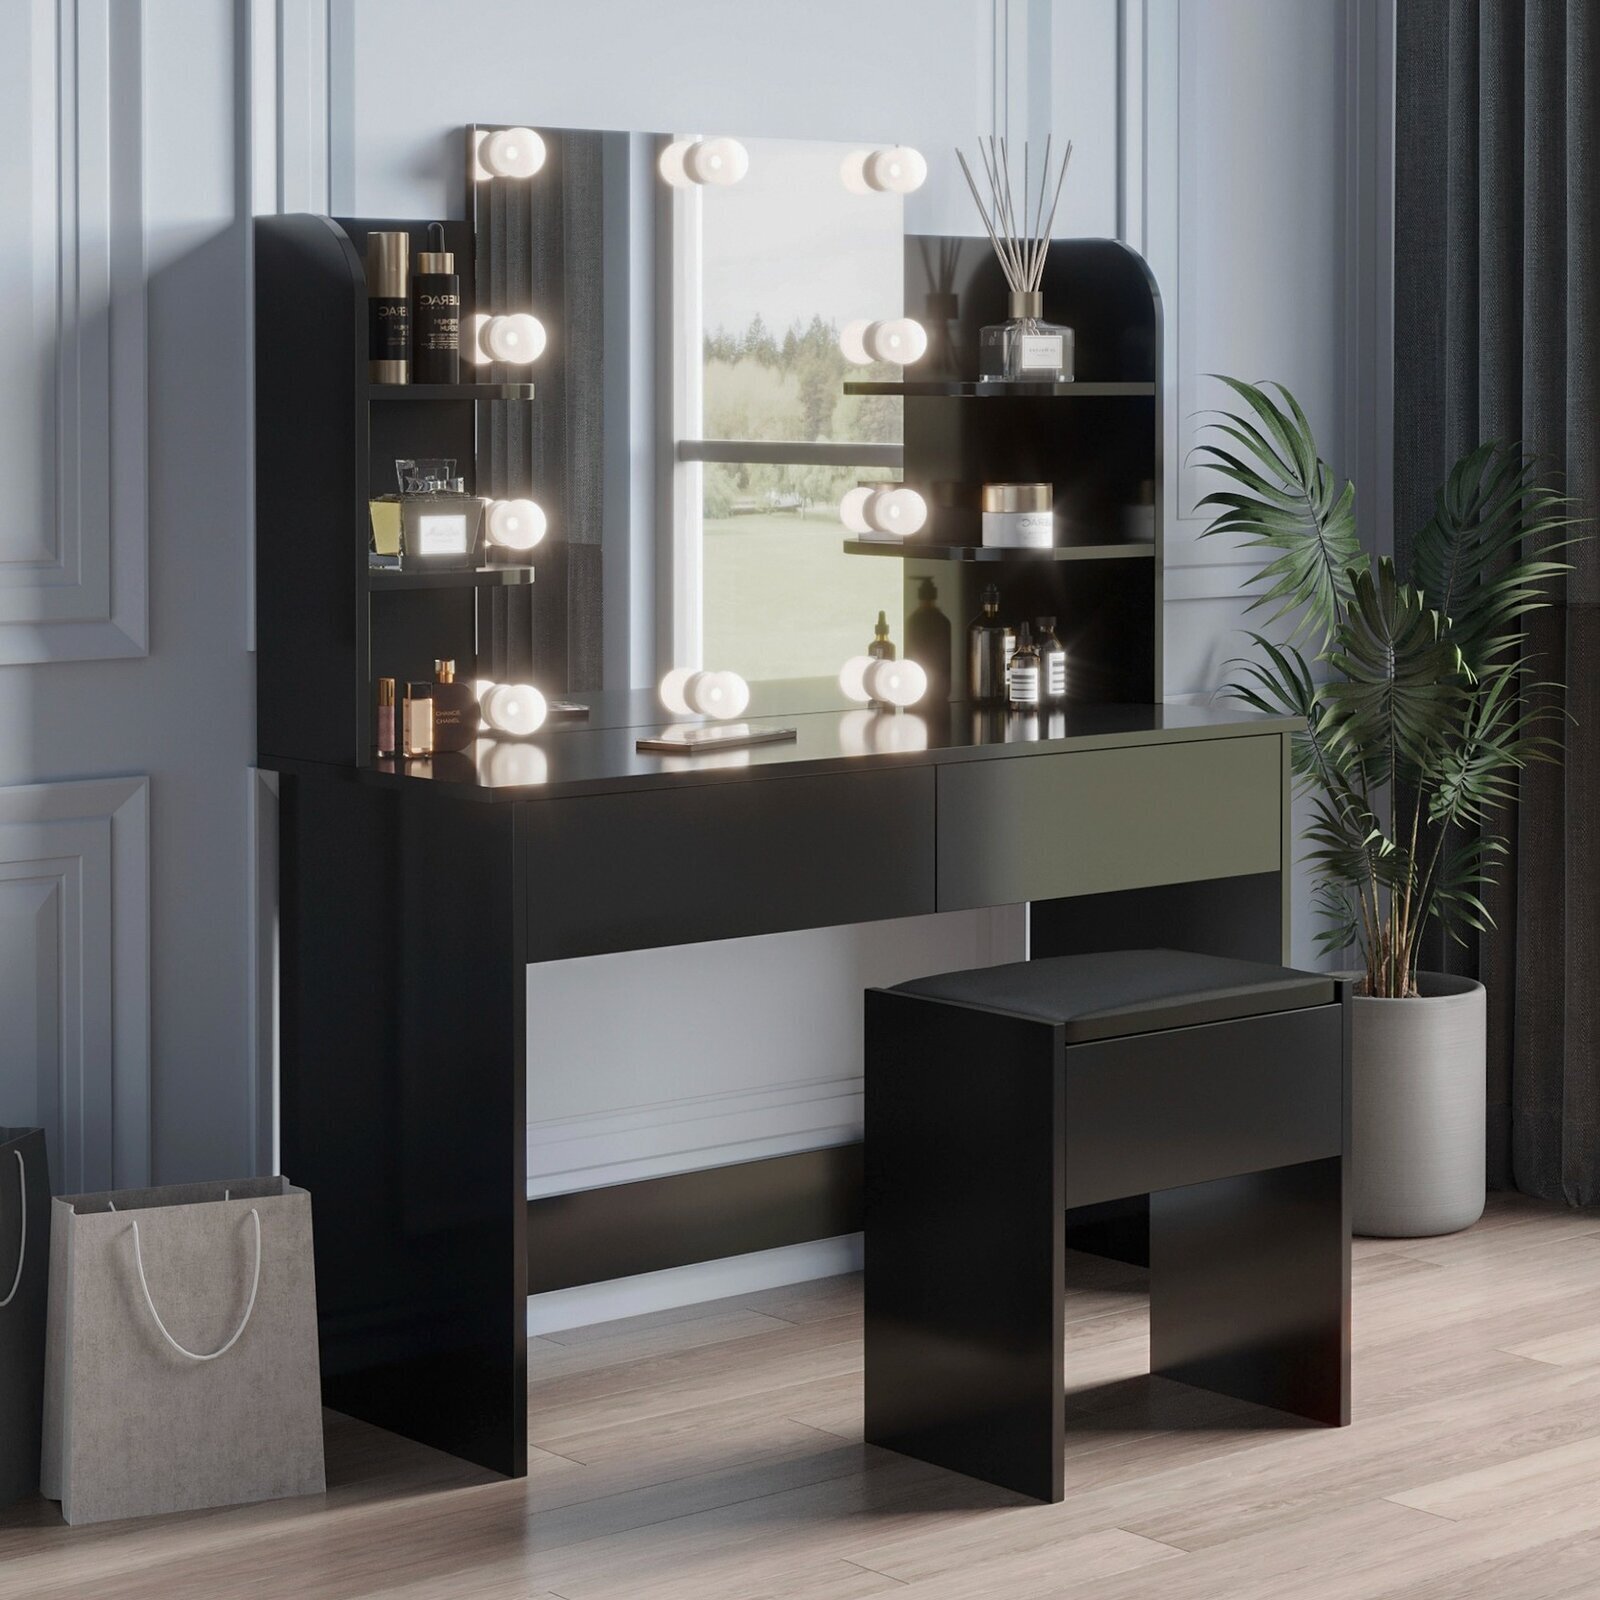 Black Vanity Table With Inward Facing Shelves